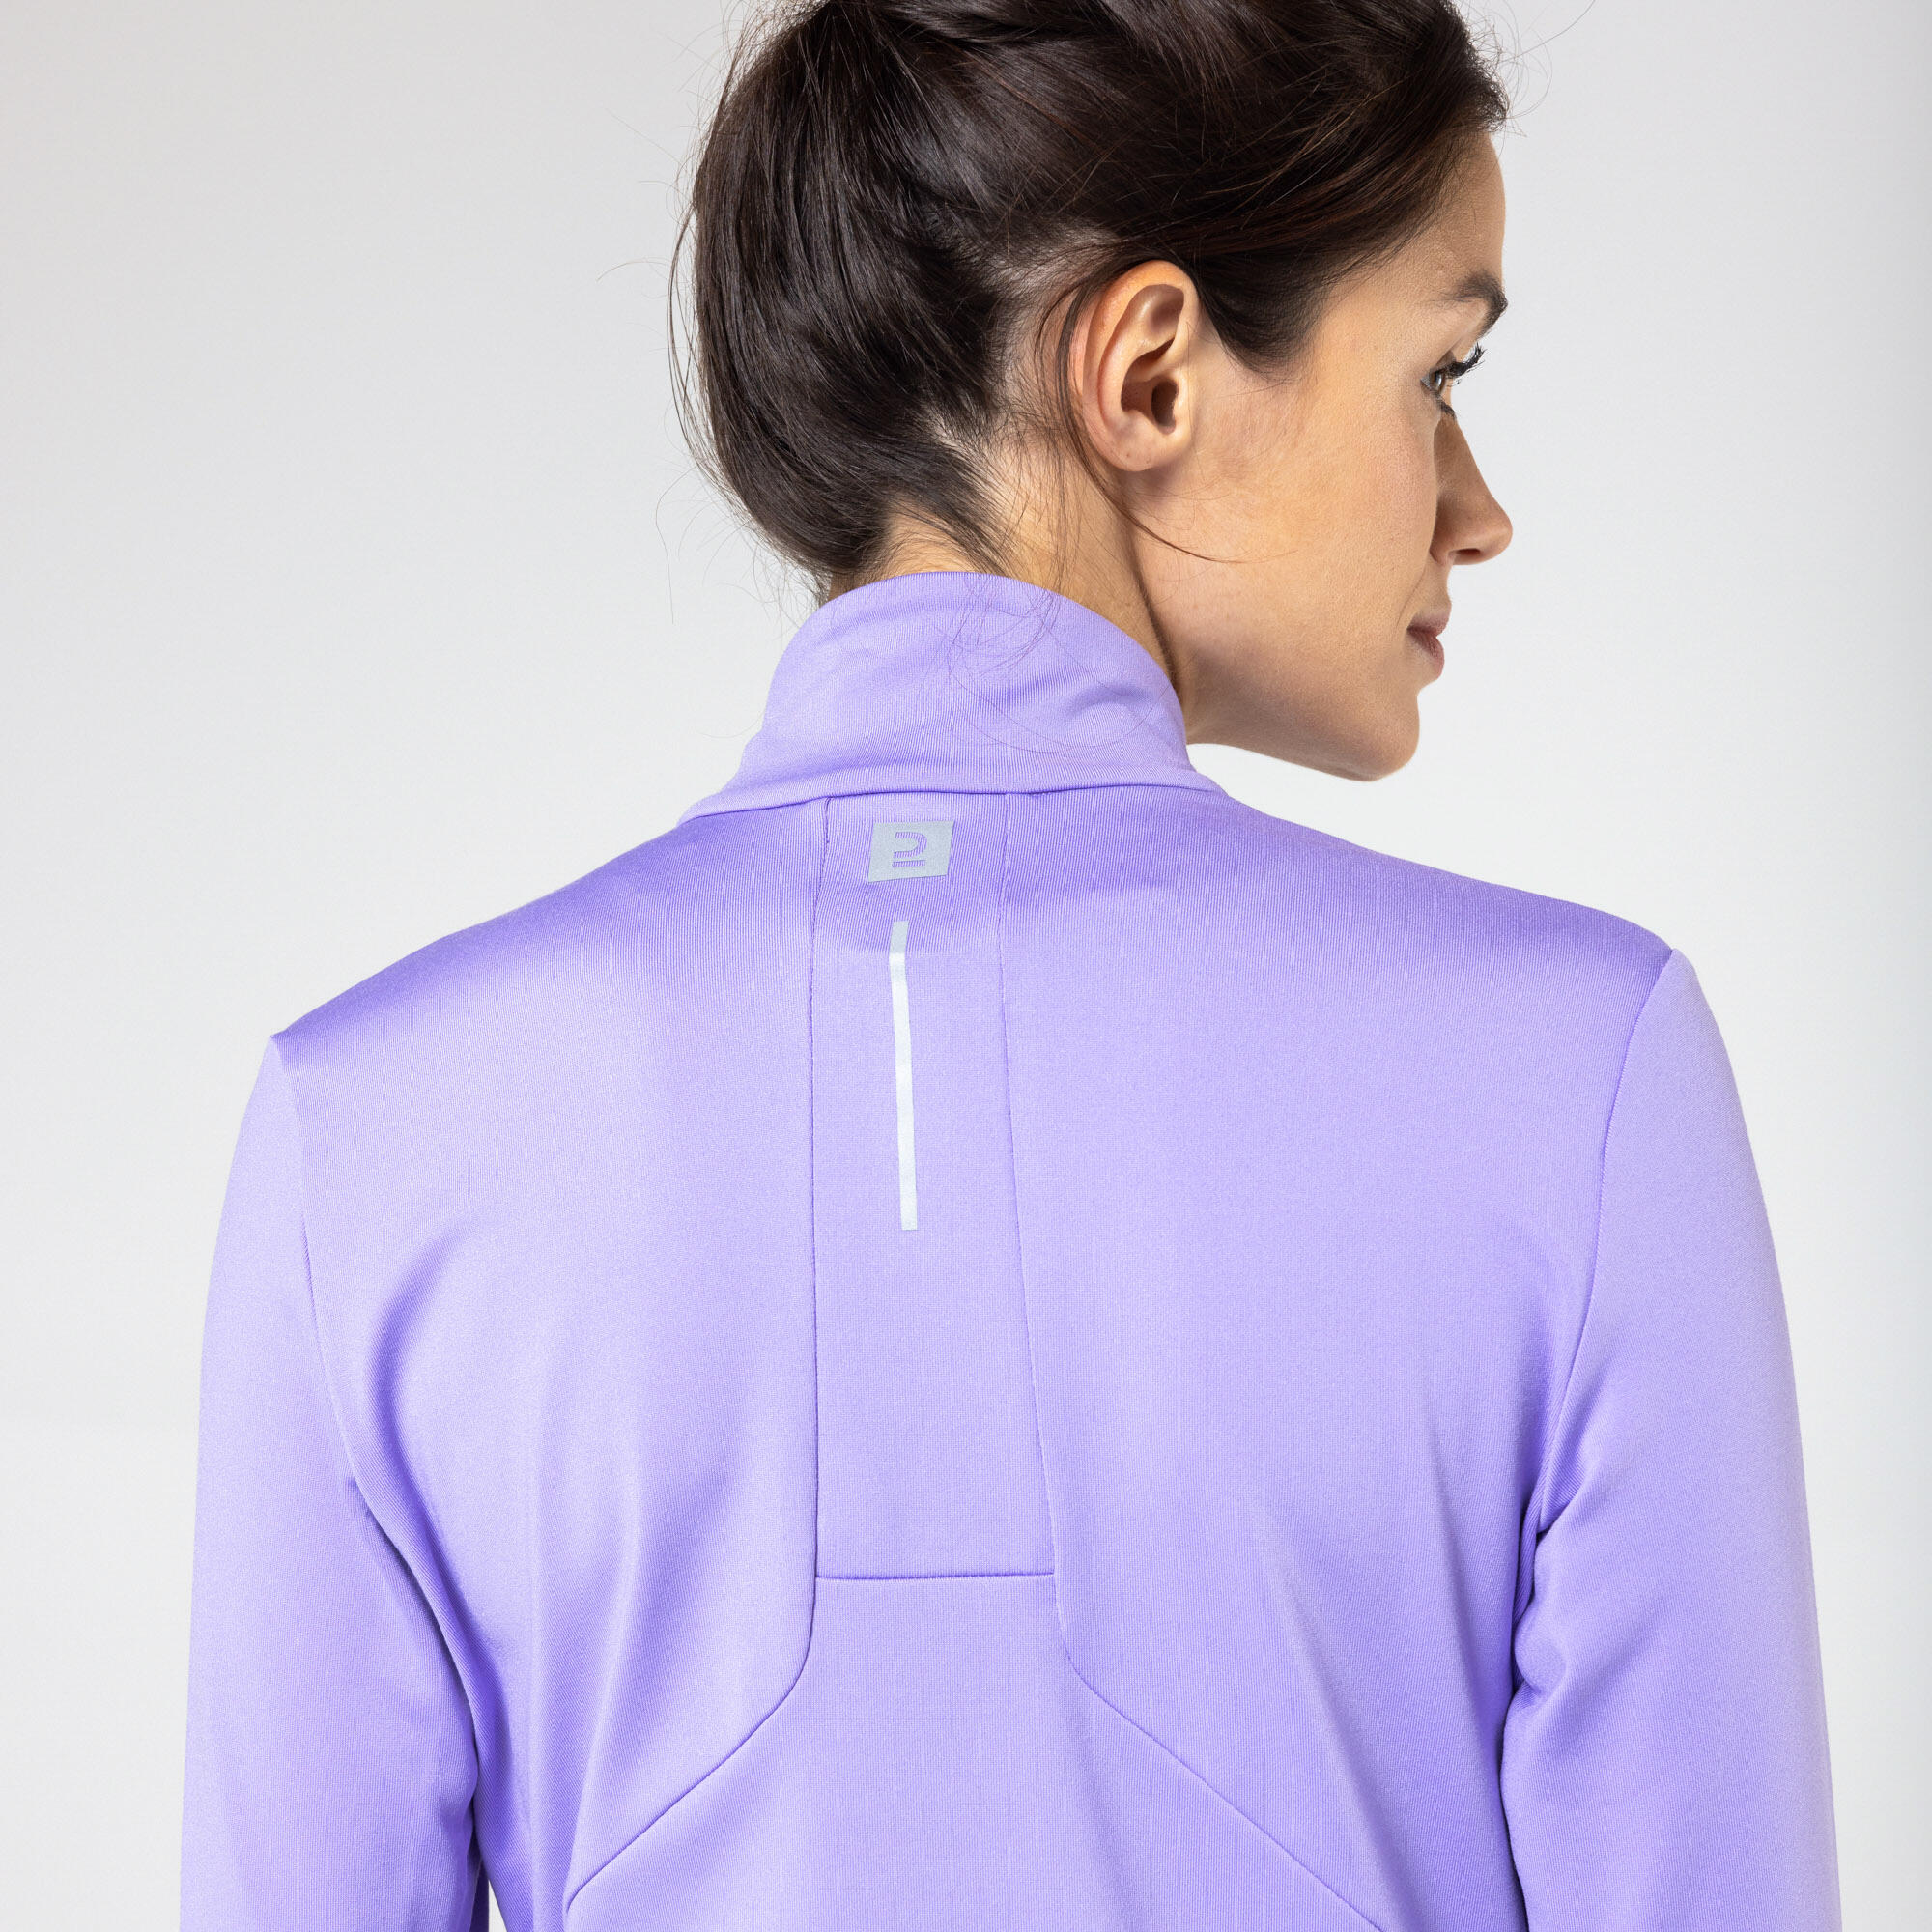 Zip Warm women's long-sleeved running T-shirt - purple 2/6